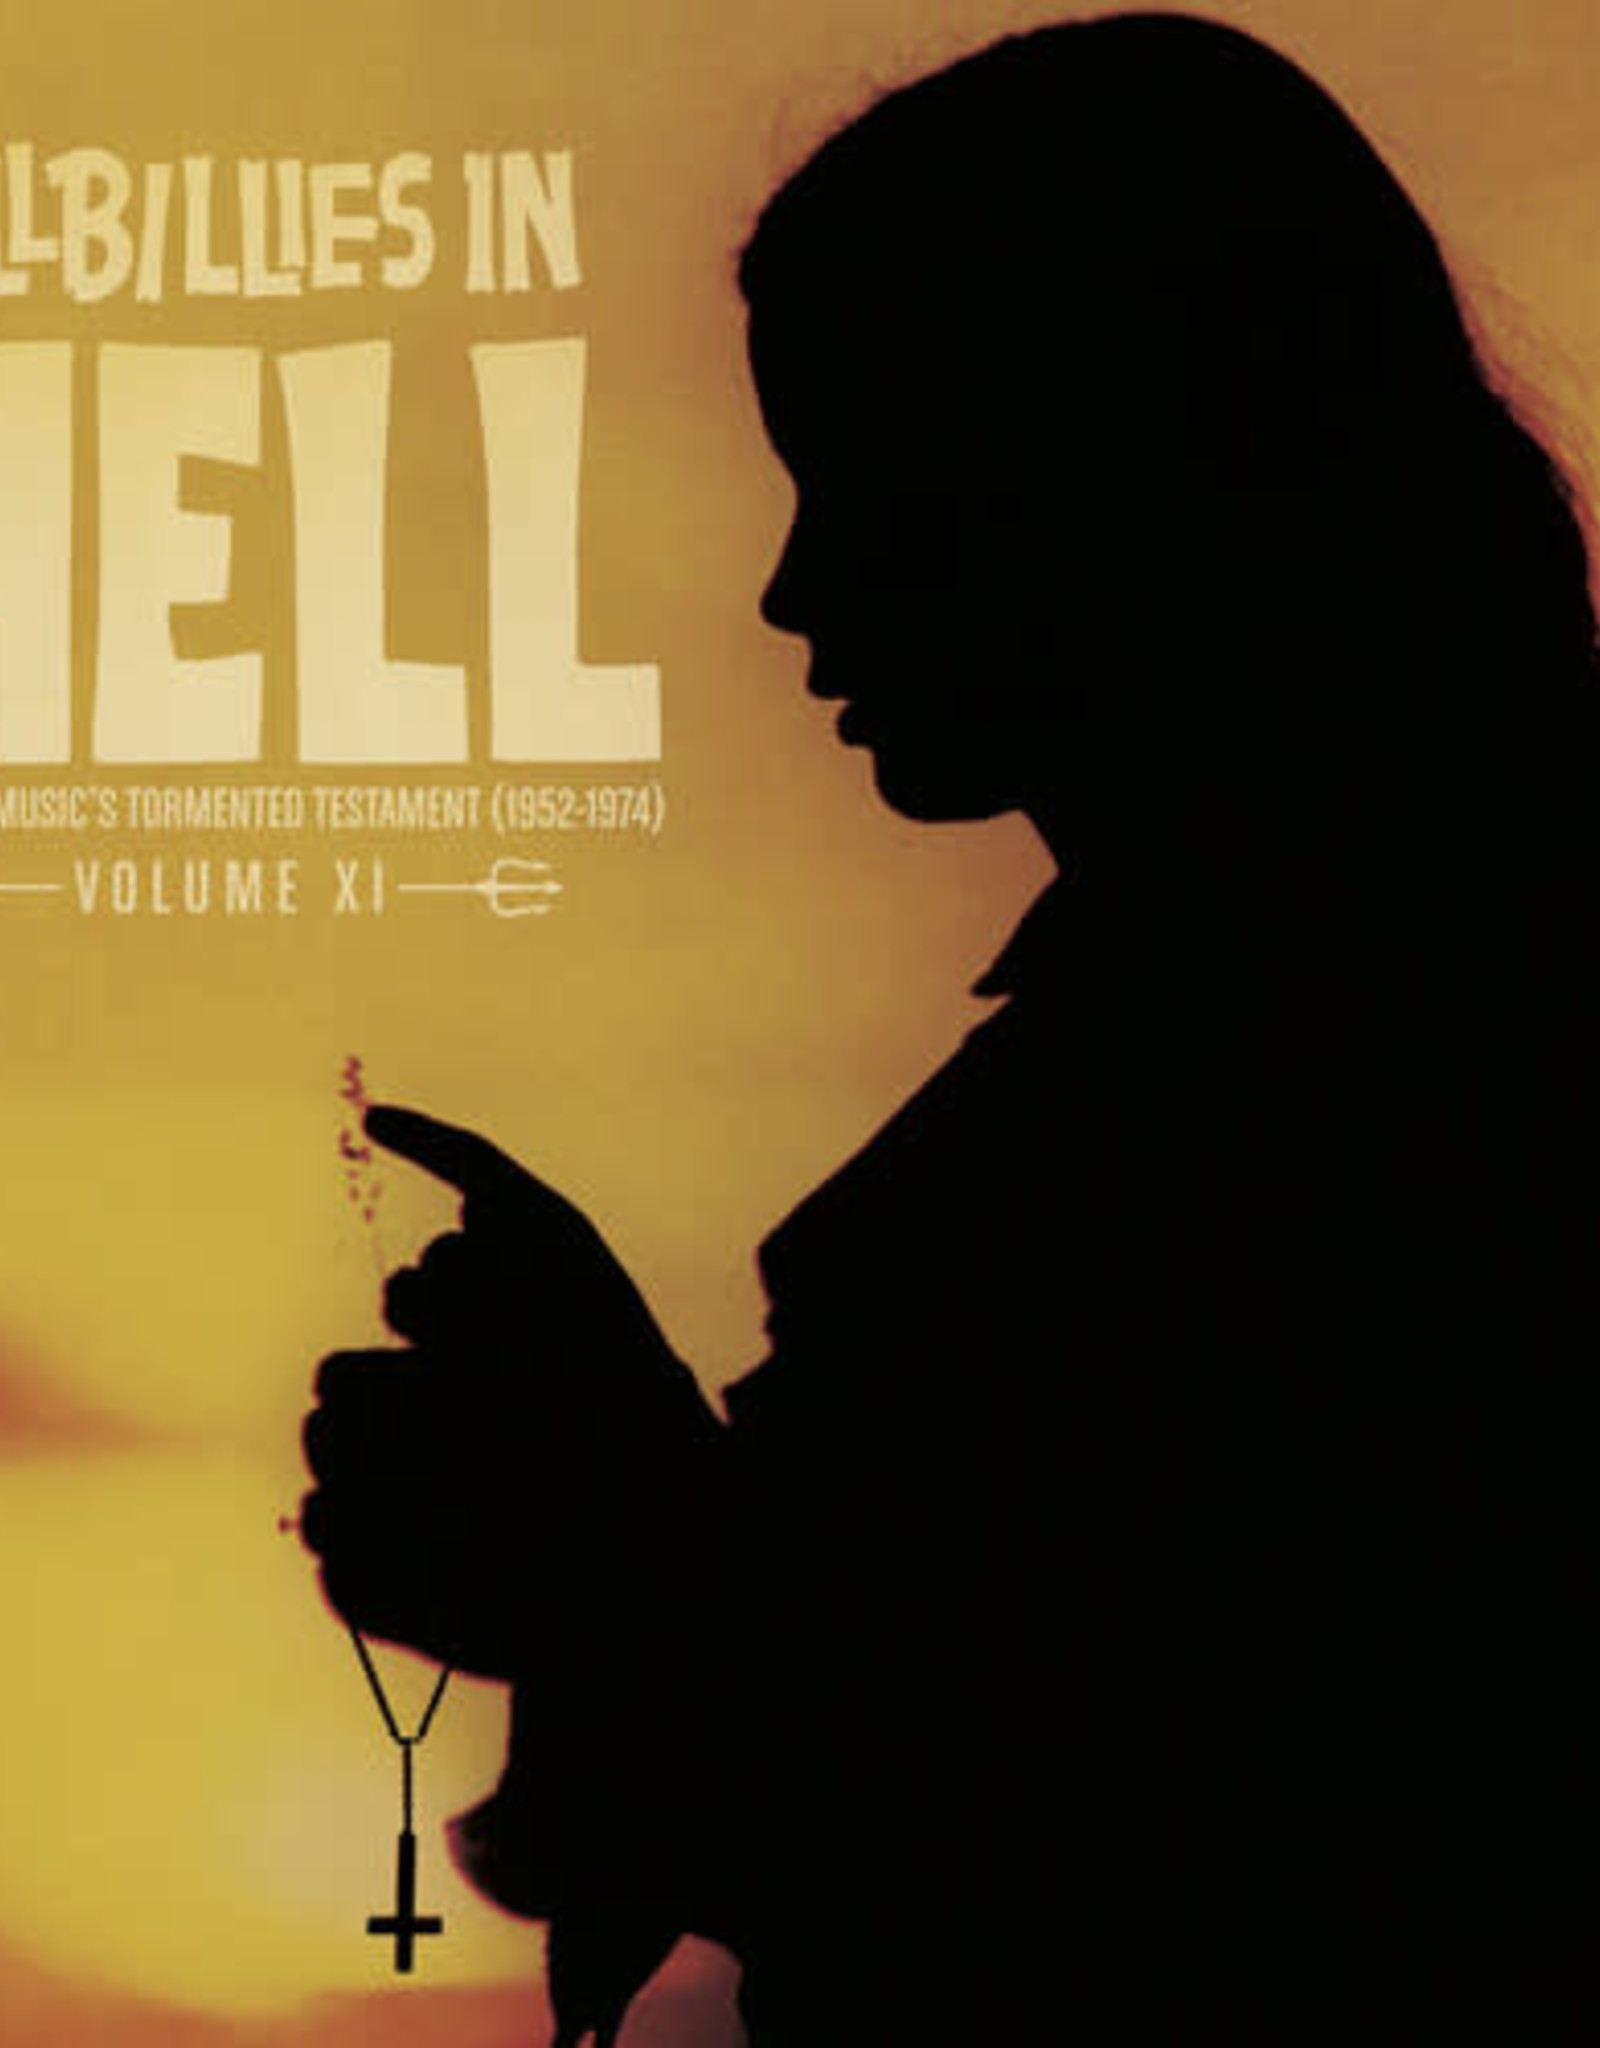 Hillbillies In Hell: Volume XI